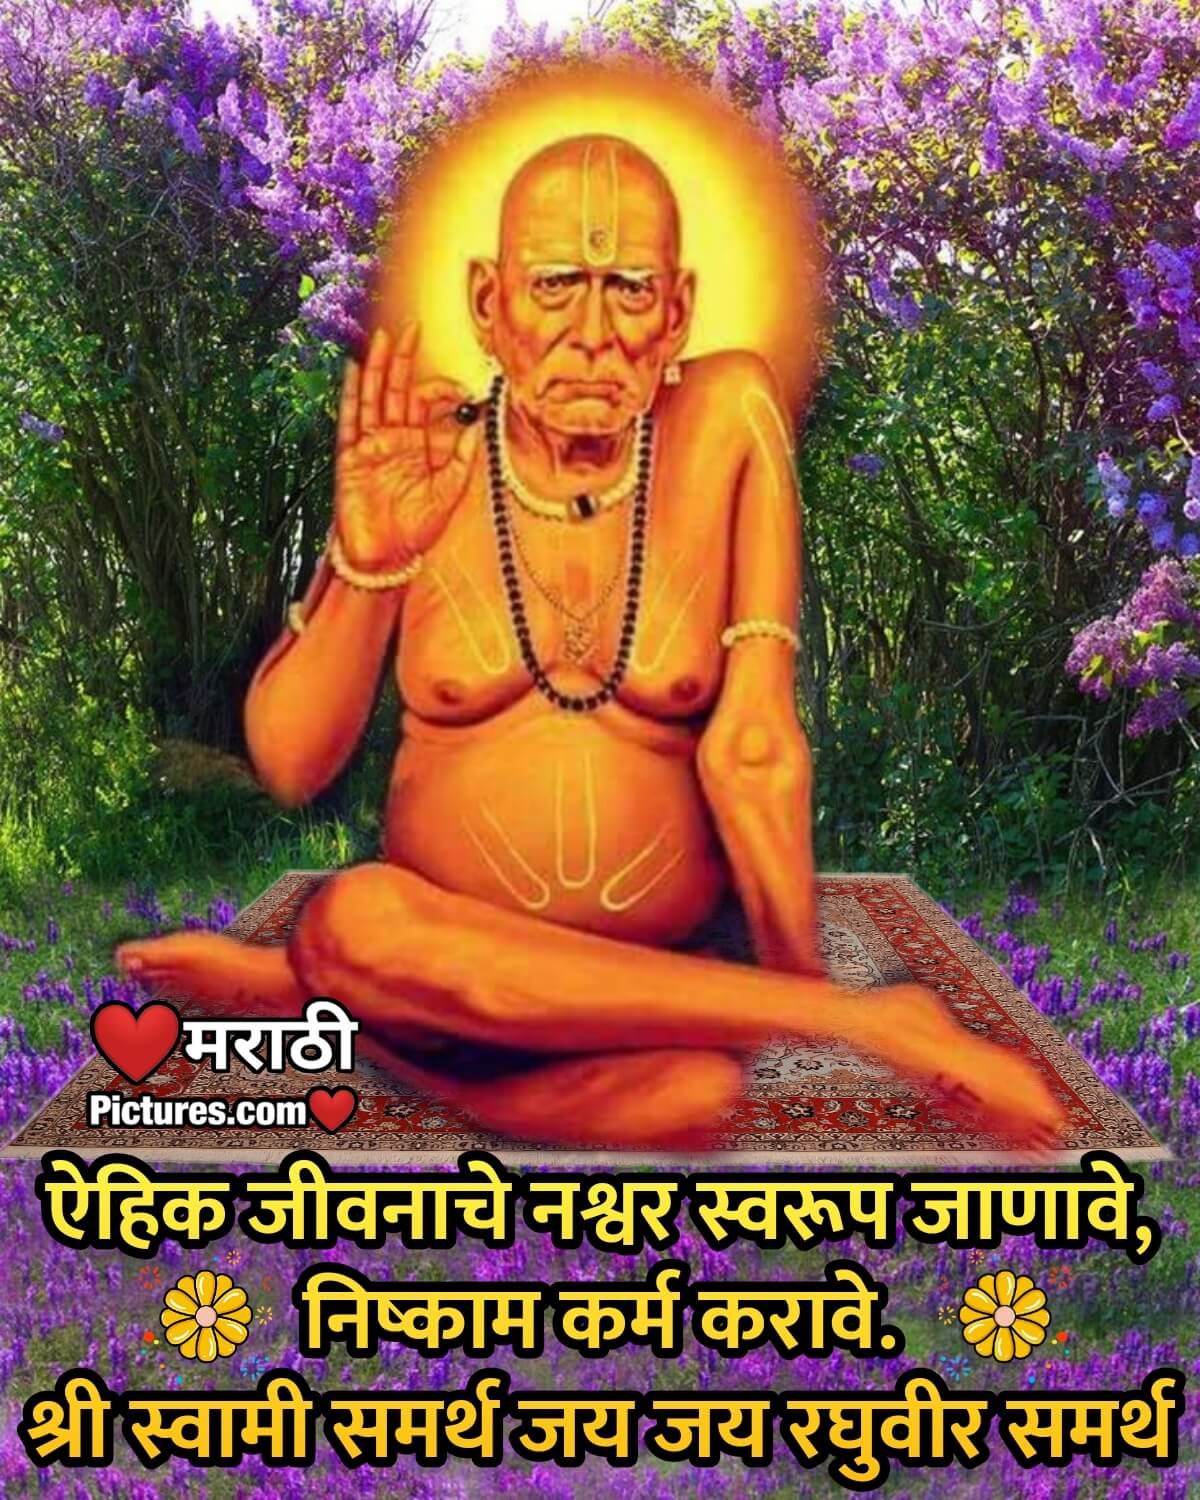 Shree Swami Samarth Marathi Quote